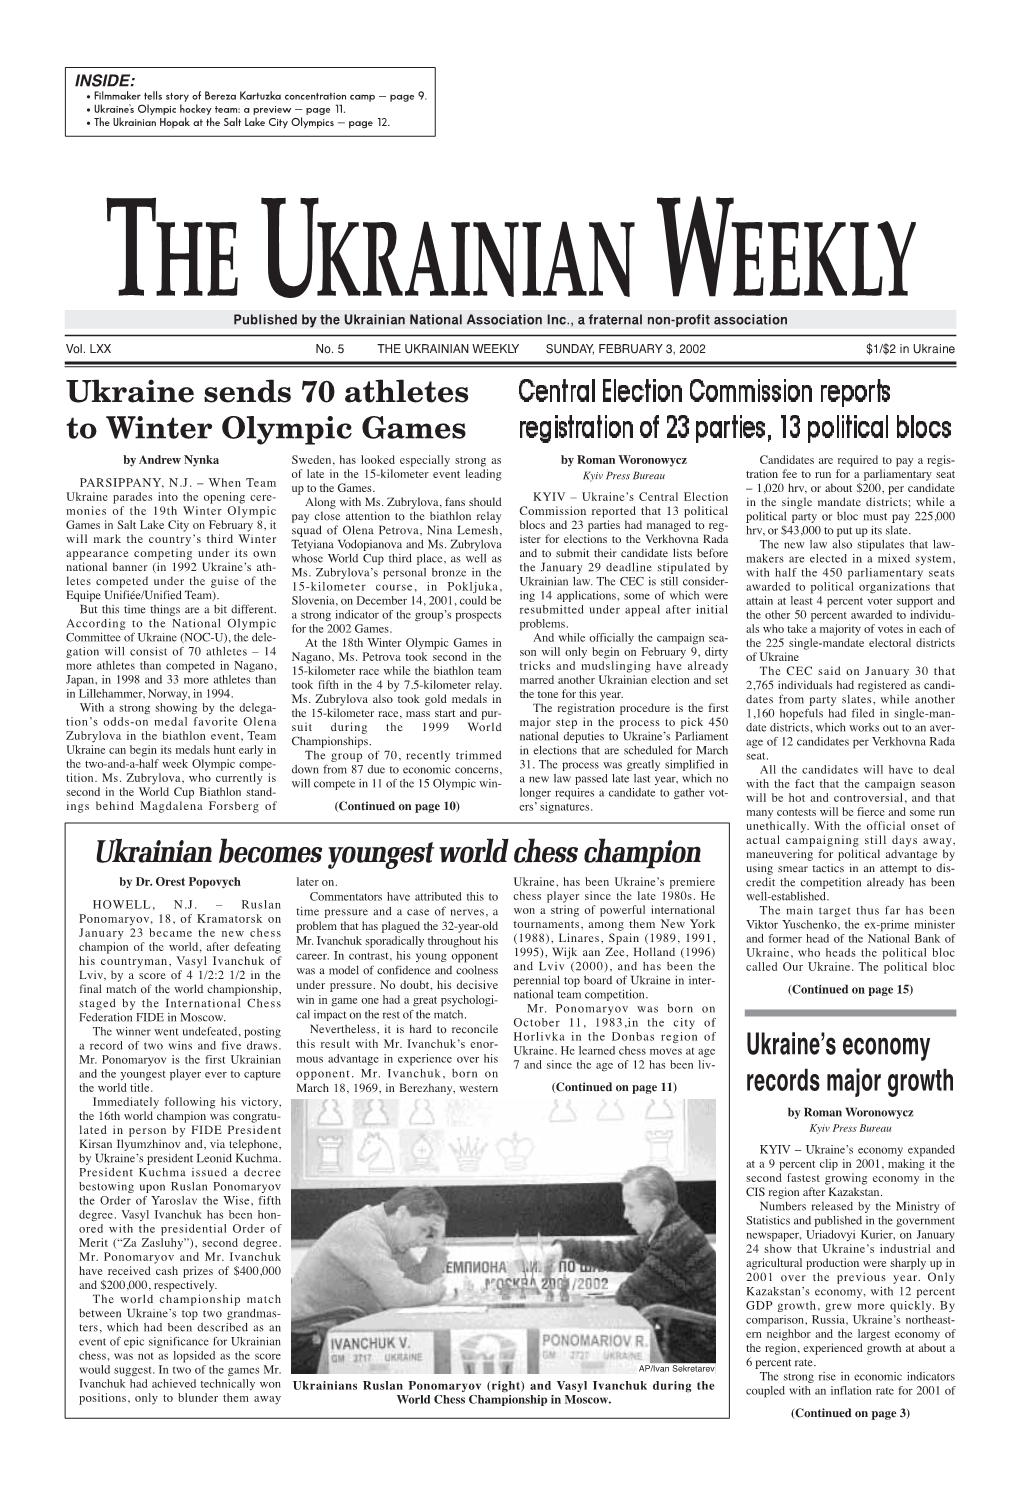 The Ukrainian Weekly 2002, No.5